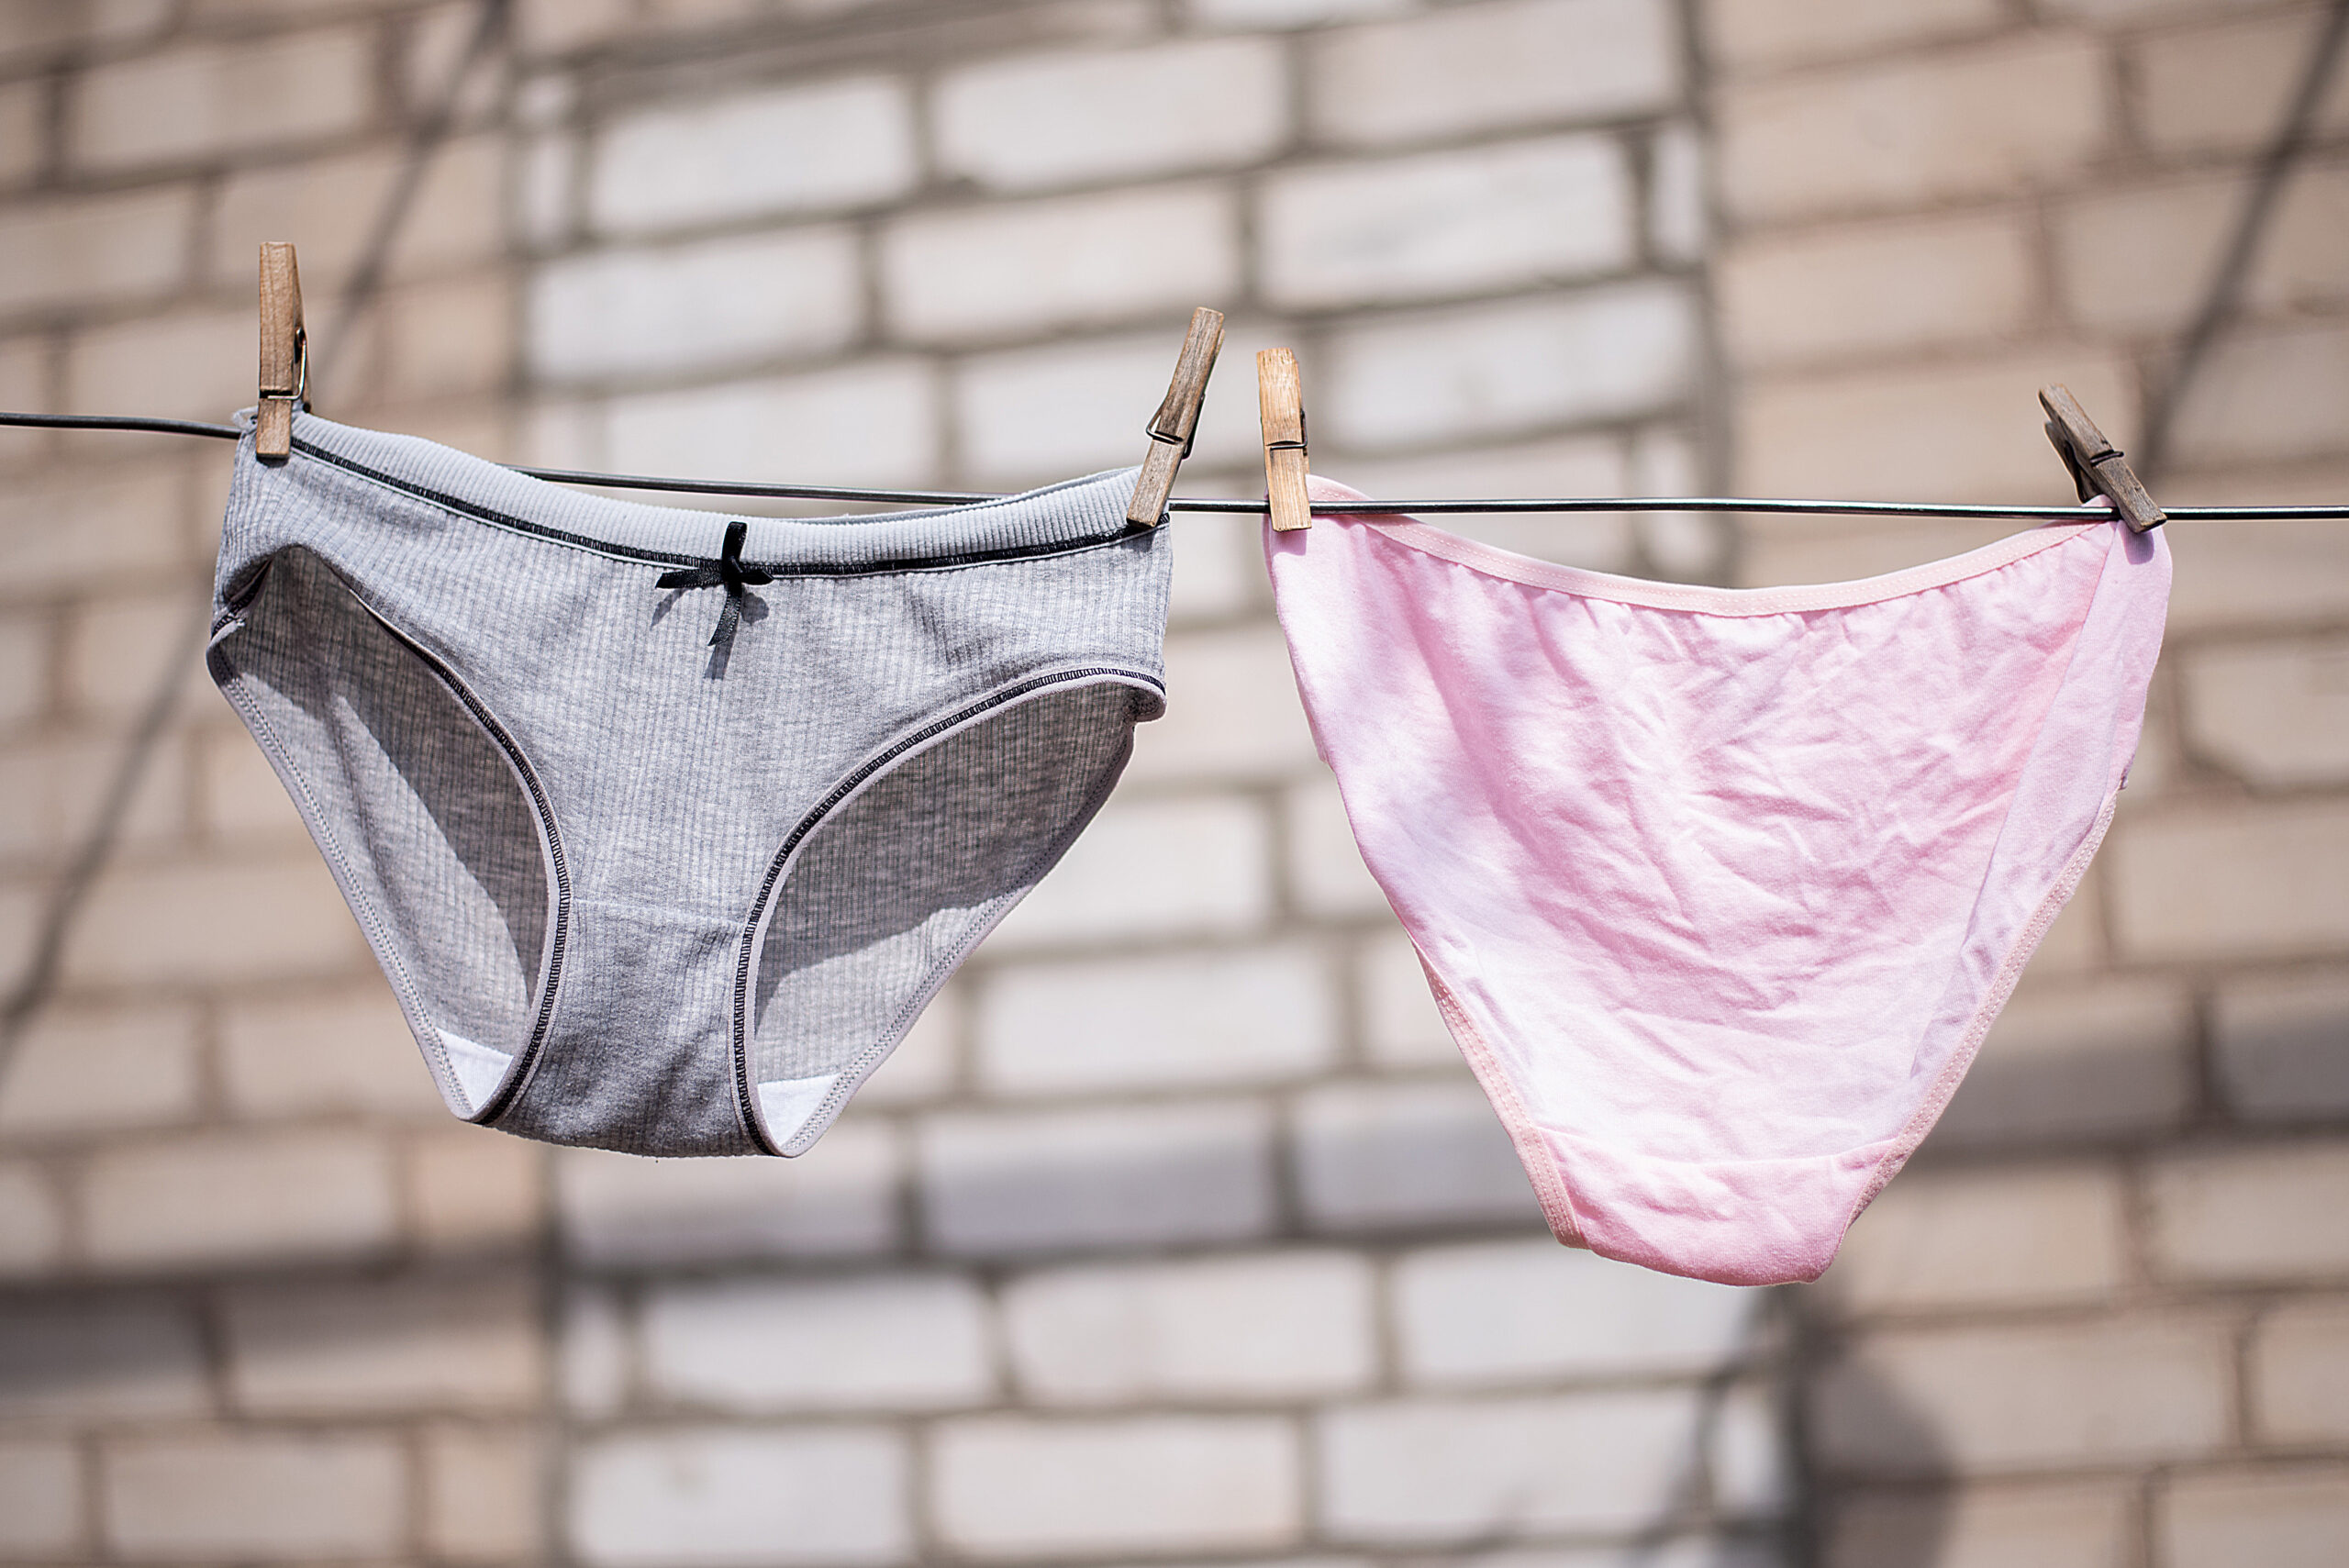 https://cdn.weirdkaya.com/wp-content/uploads/women-s-panties-underwear-after-washing-dry-rope-sunny-weather-clothespins-background-bricksxa-scaled.jpg